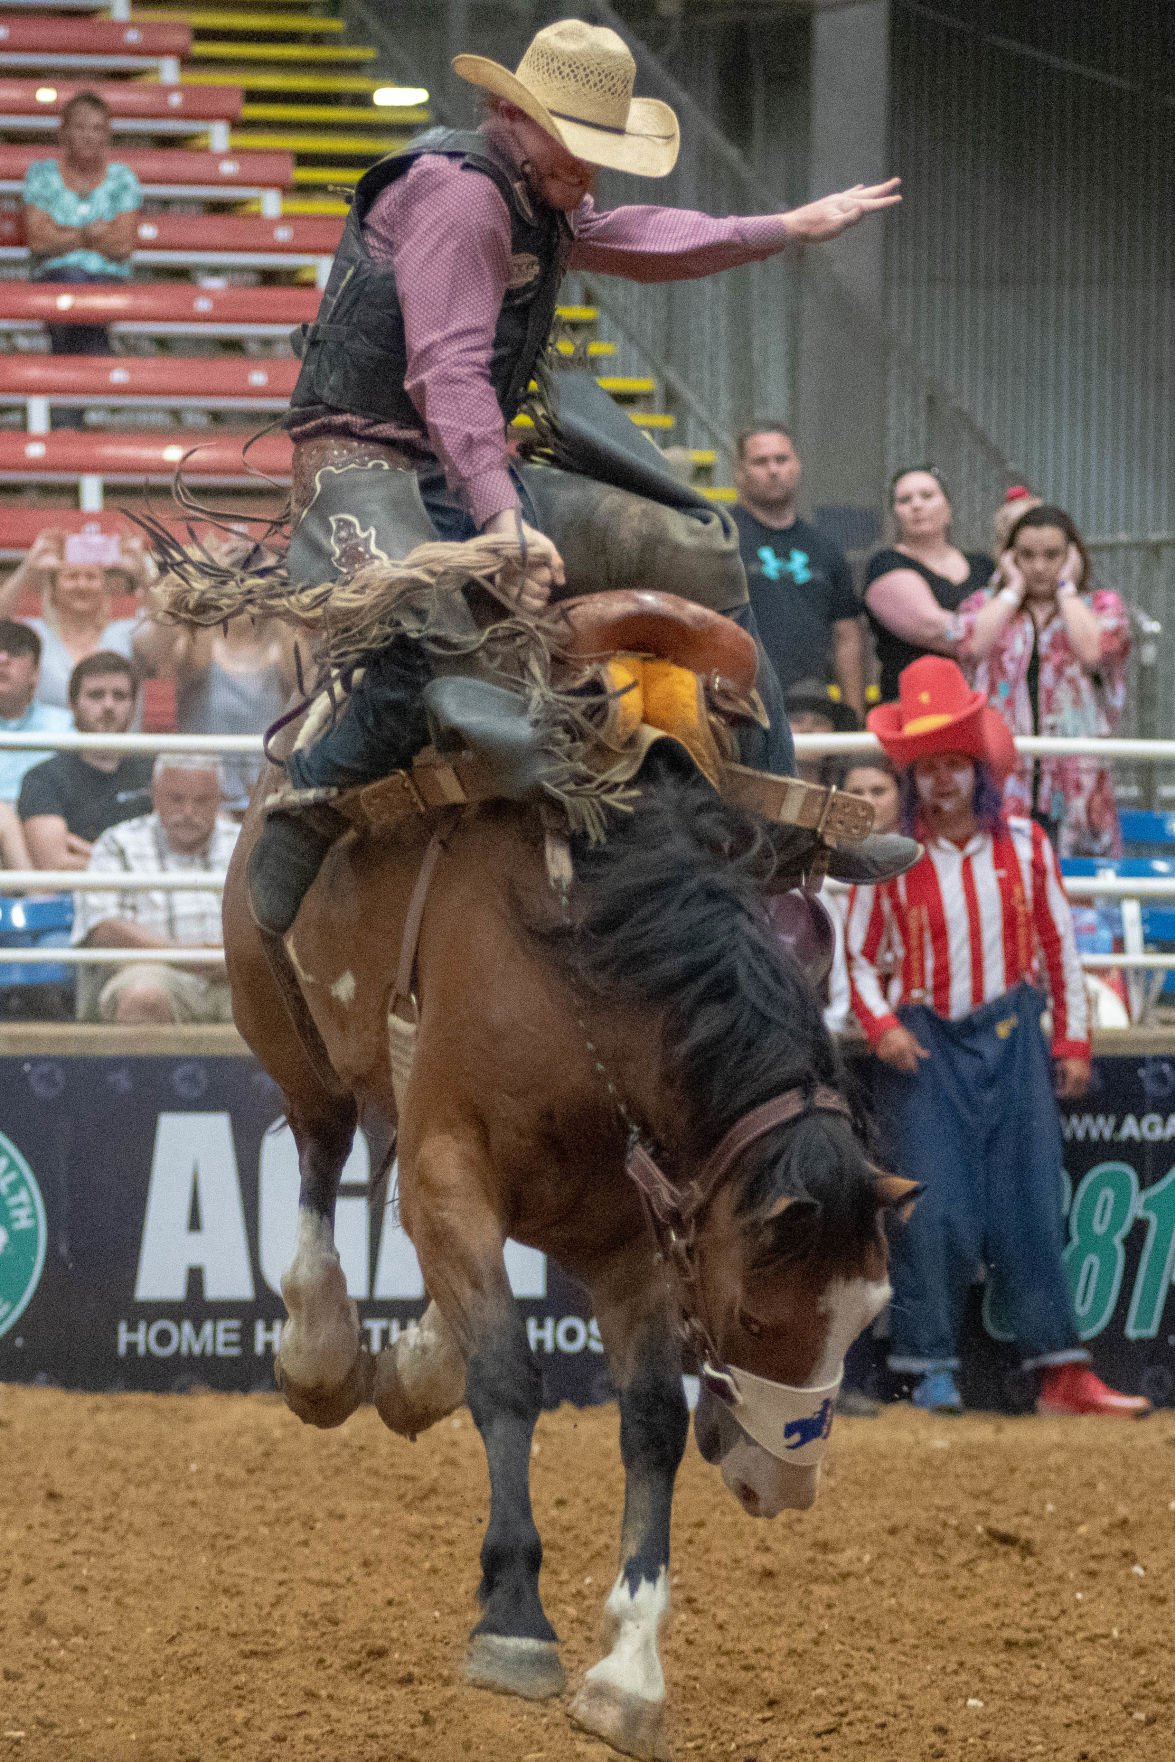 Mesquite Rodeo's 2018 season underway | News | starlocalmedia.com